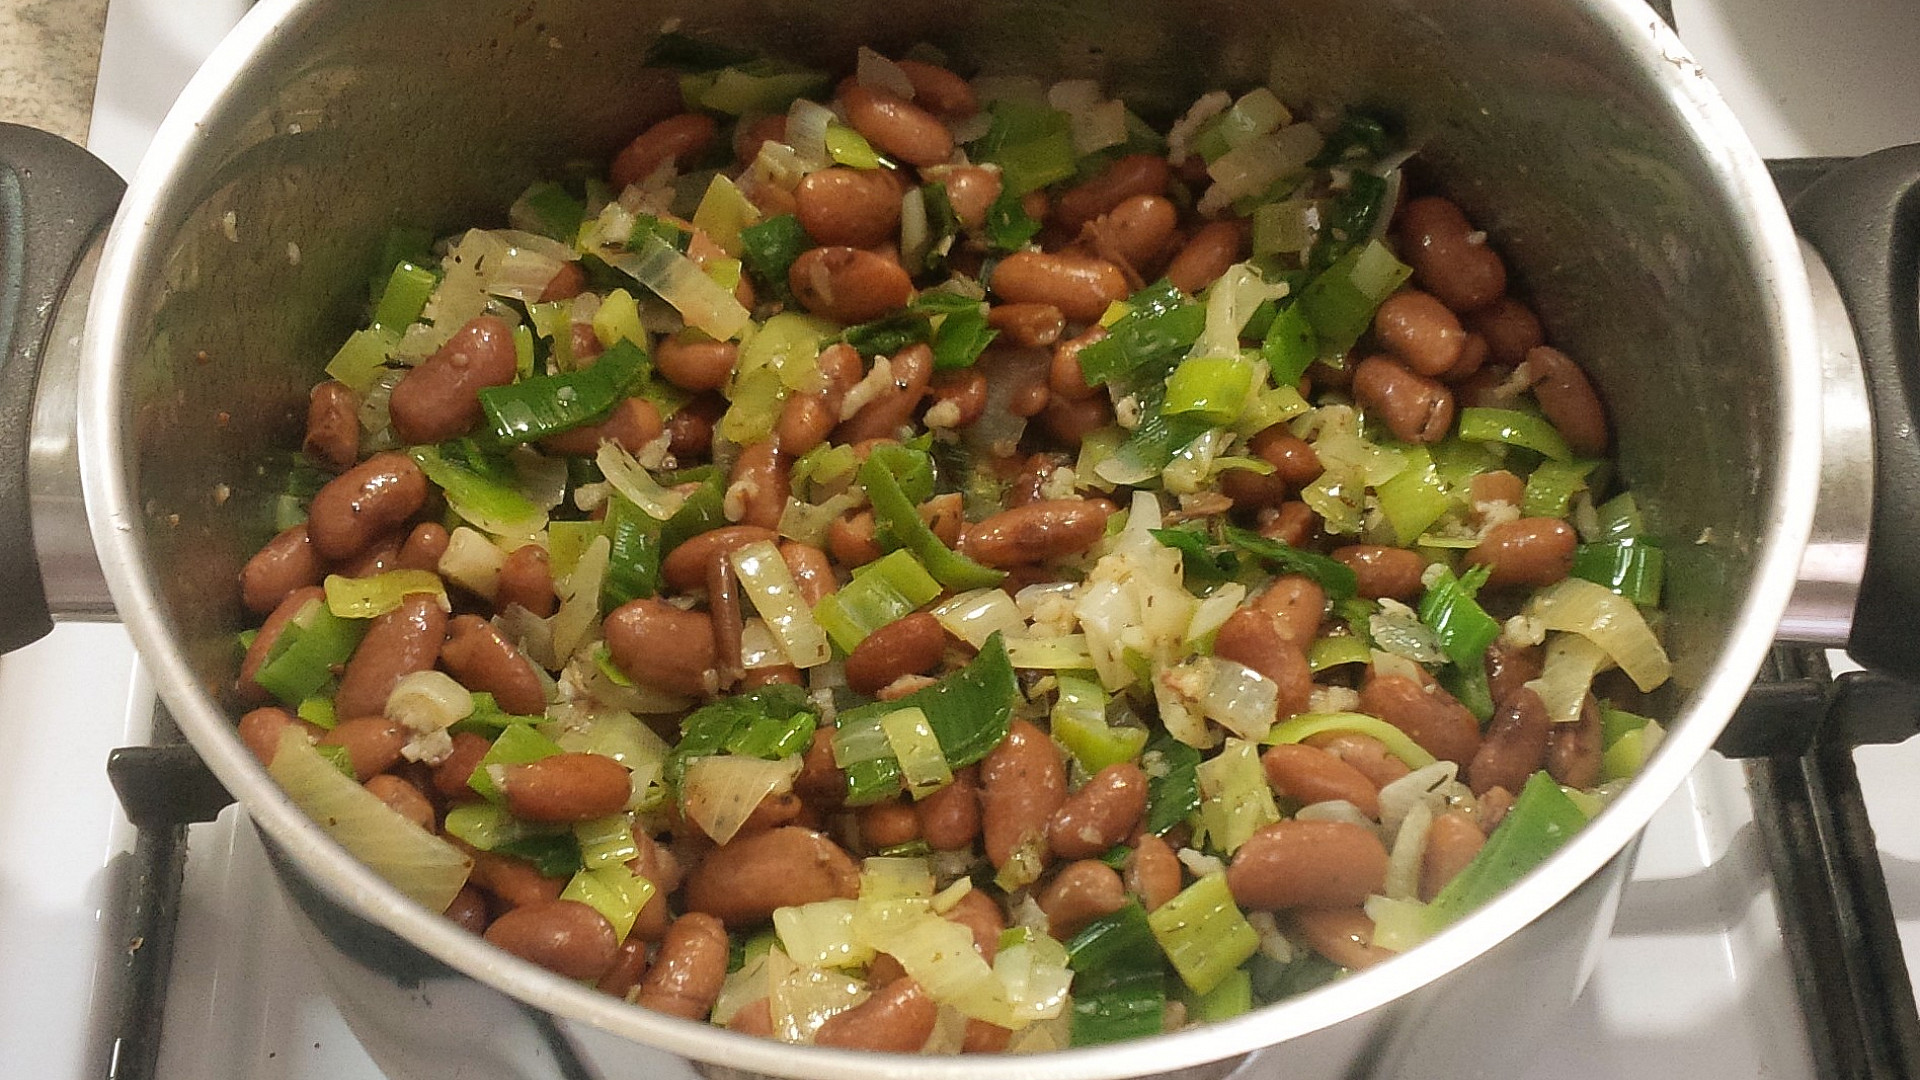 Teplý fazolový salát s pórkem